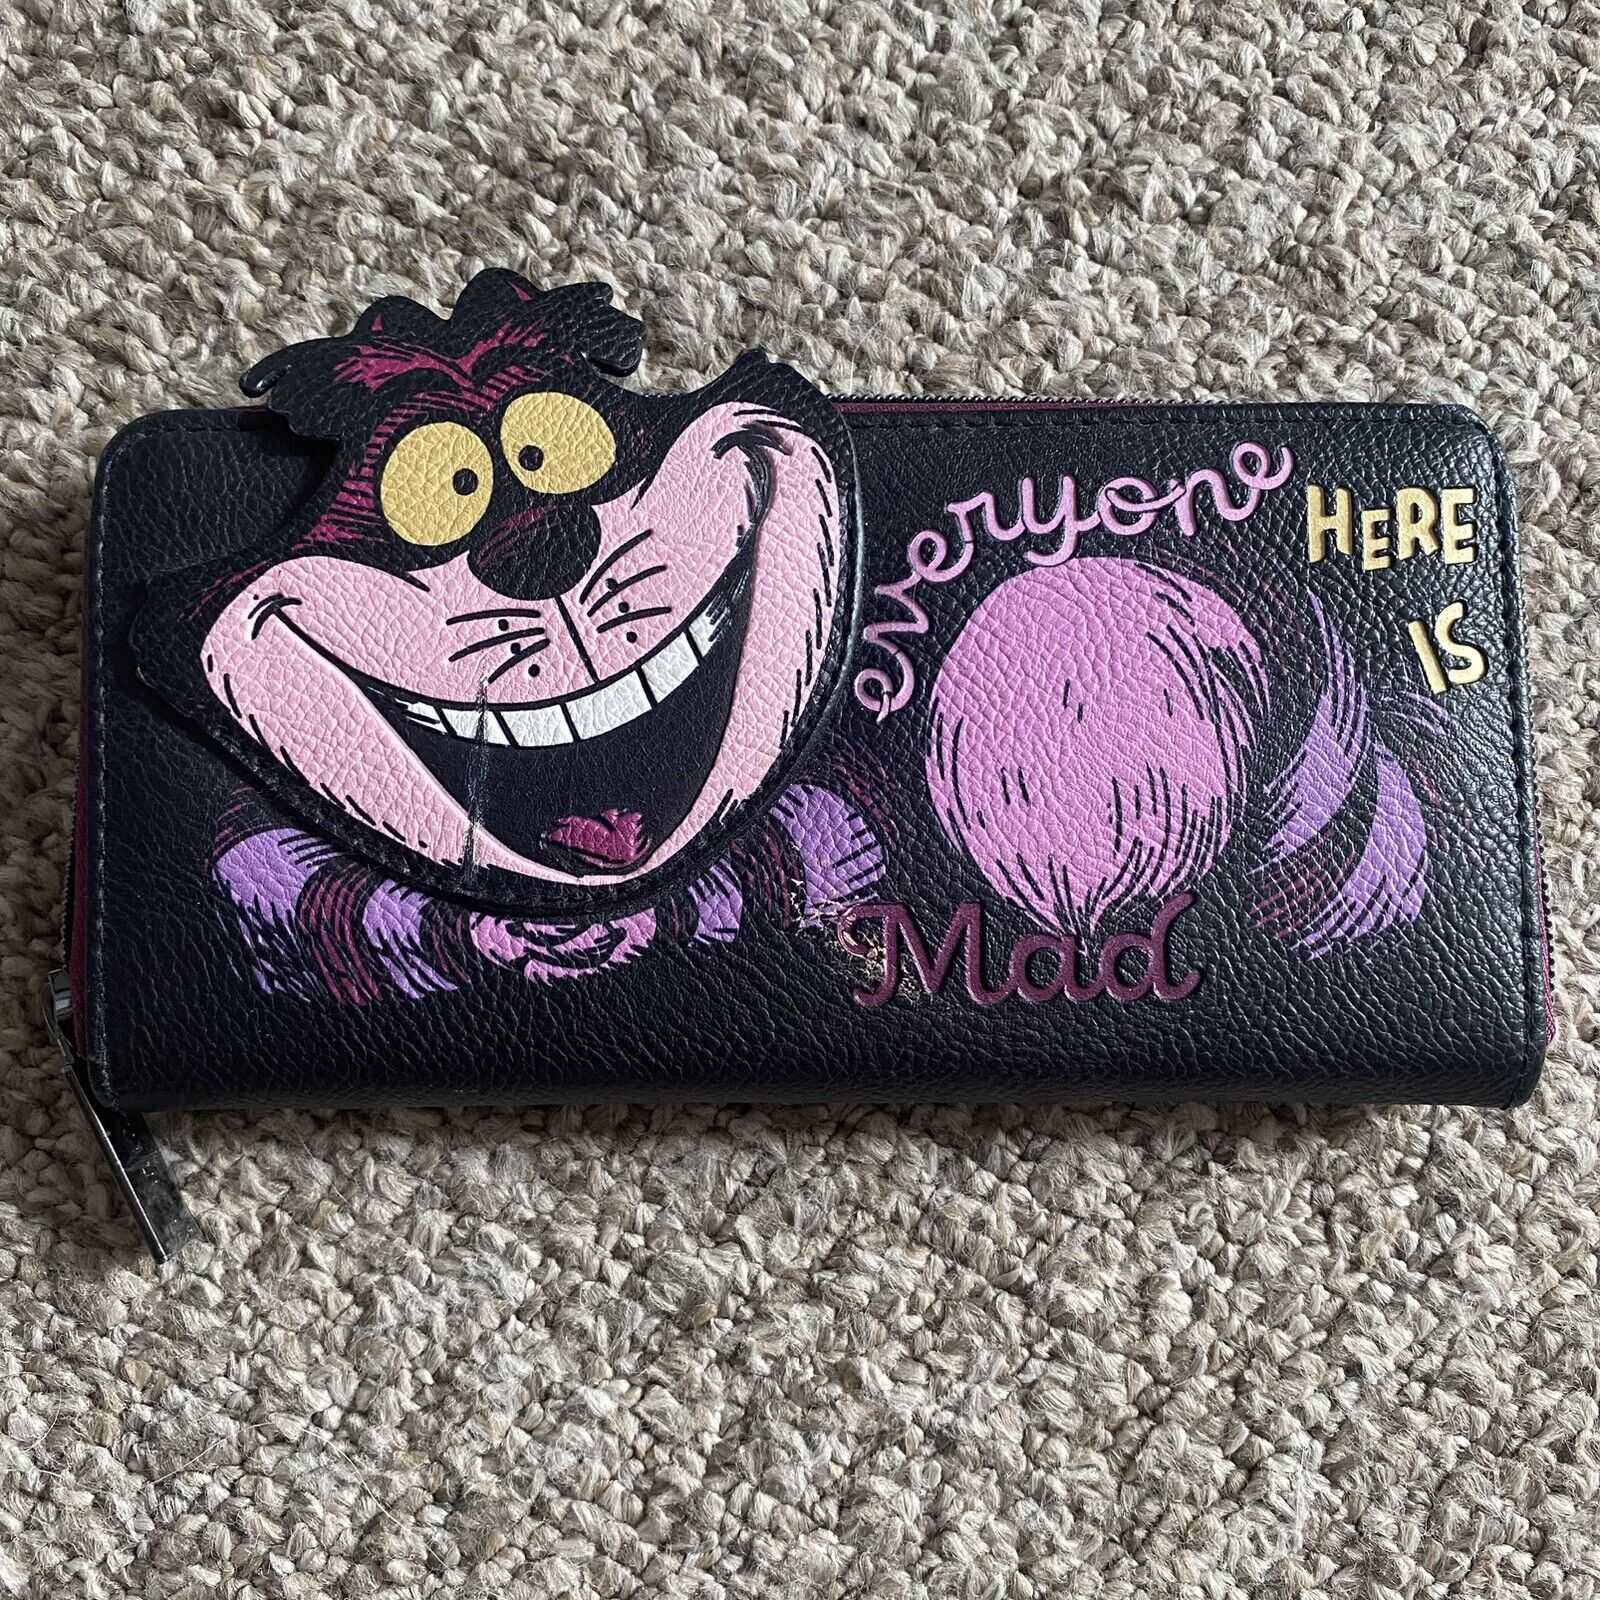 Danielle Nicole x Disney Wallet Alice In Wonderland Cheshire Cat FLAW READ